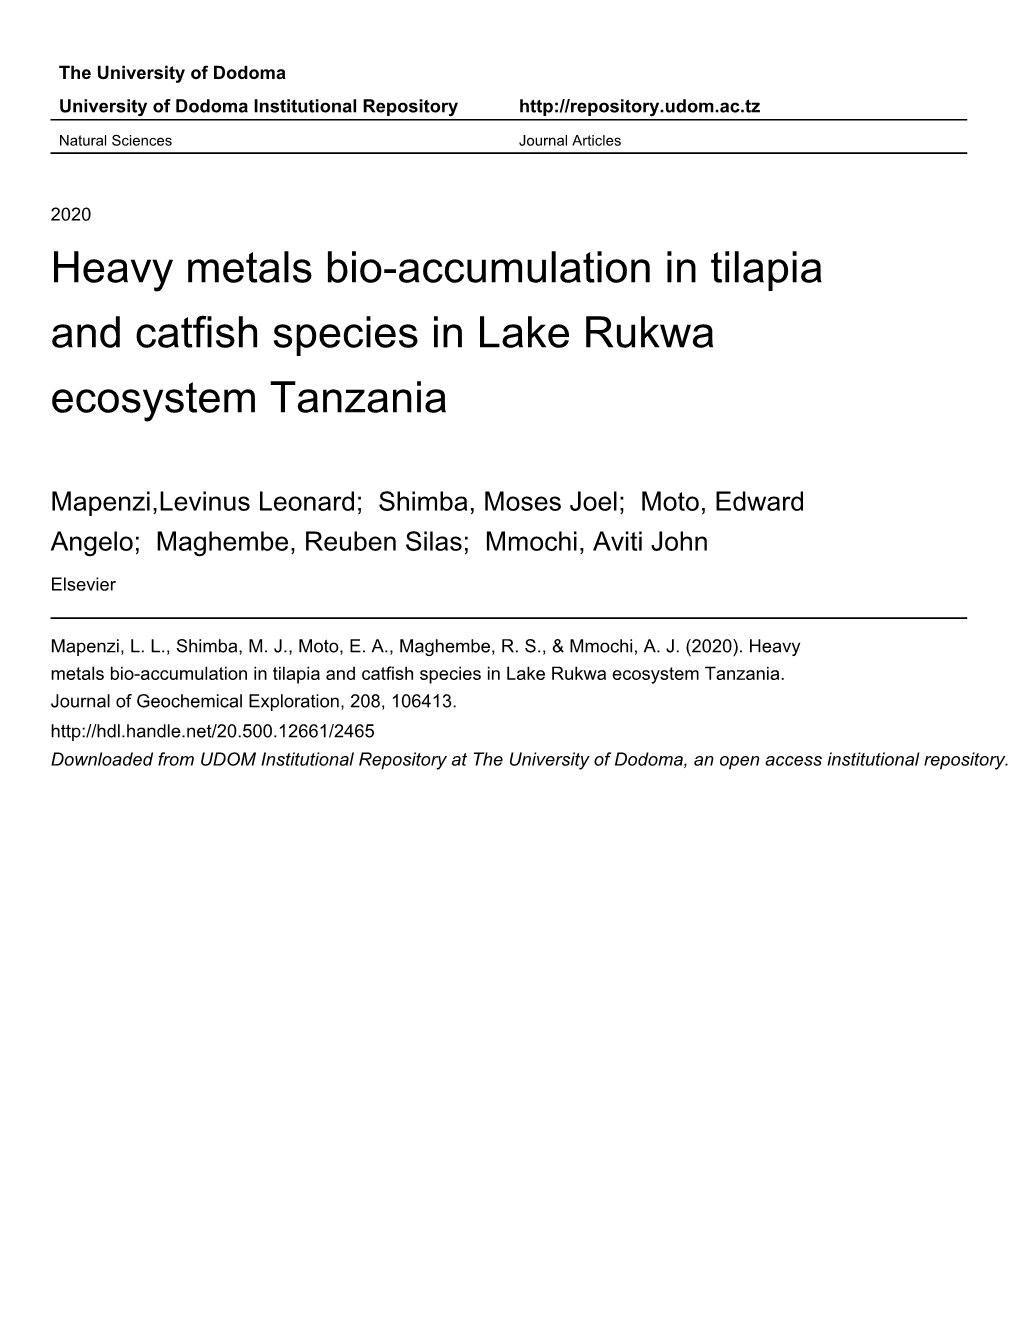 Heavy Metals Bio-Accumulation in Tilapia and Catfish Species in Lake Rukwa Ecosystem Tanzania